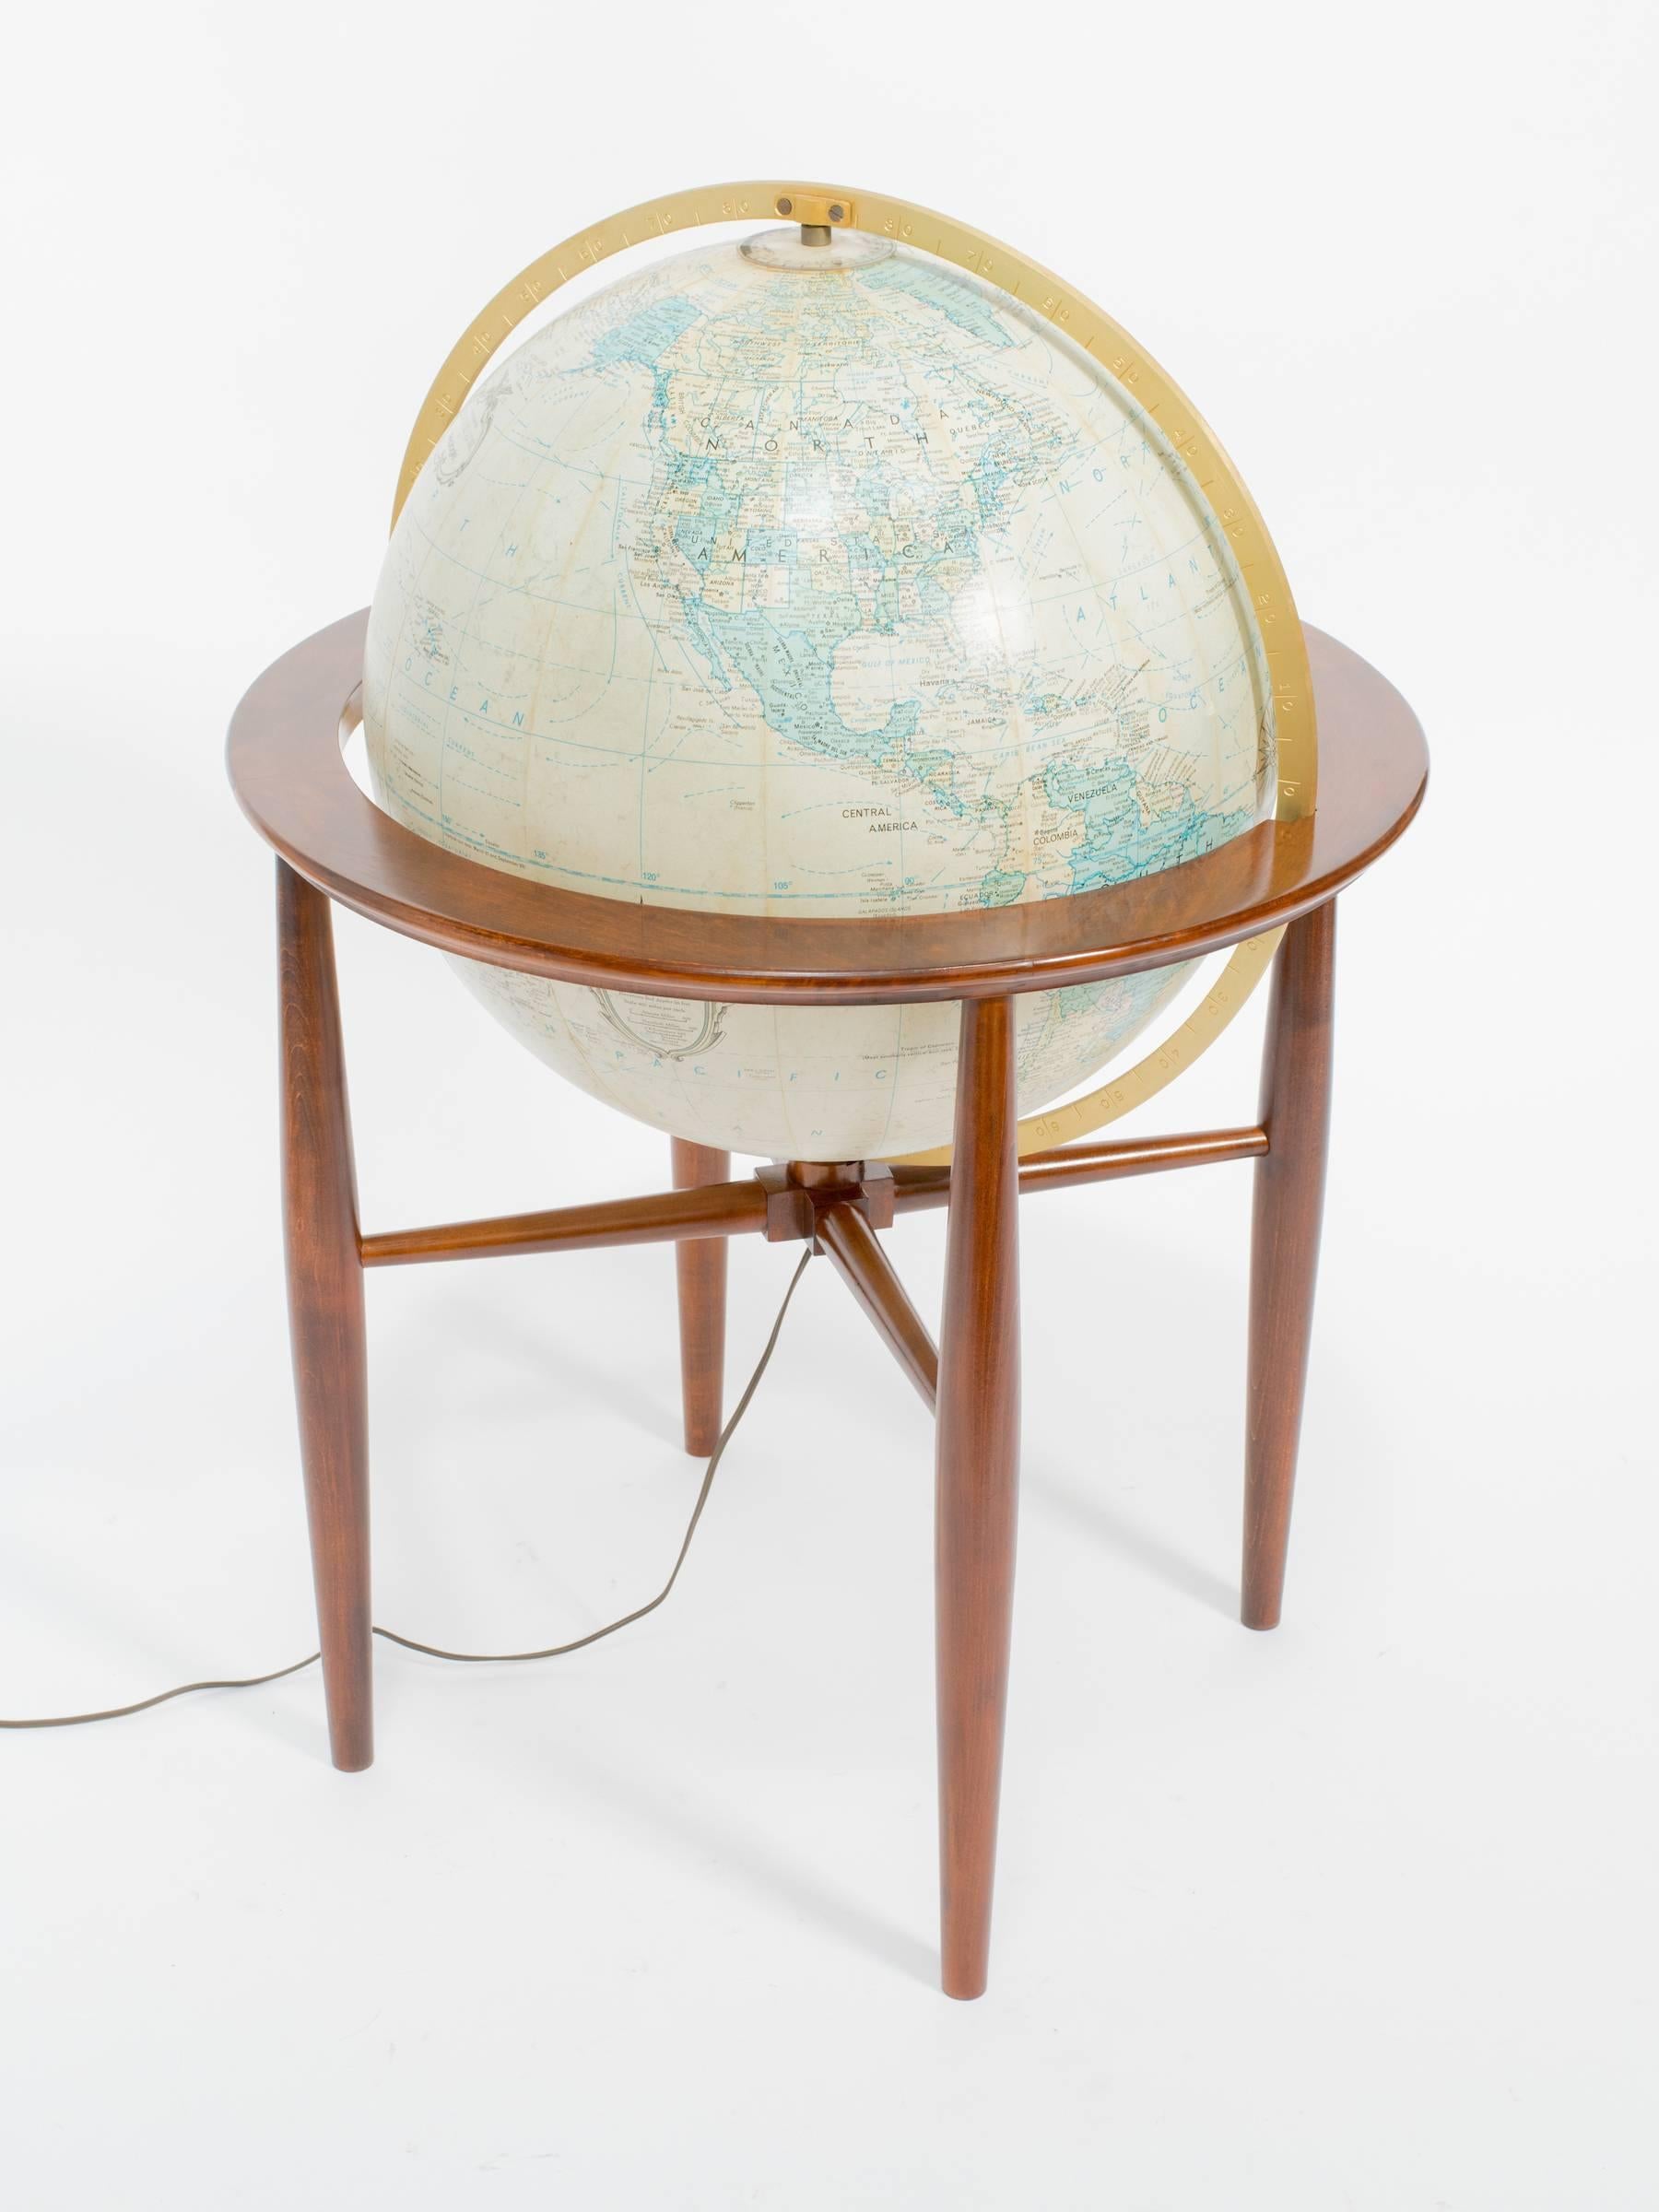 Refinished Replogle illuminated globe on stand.